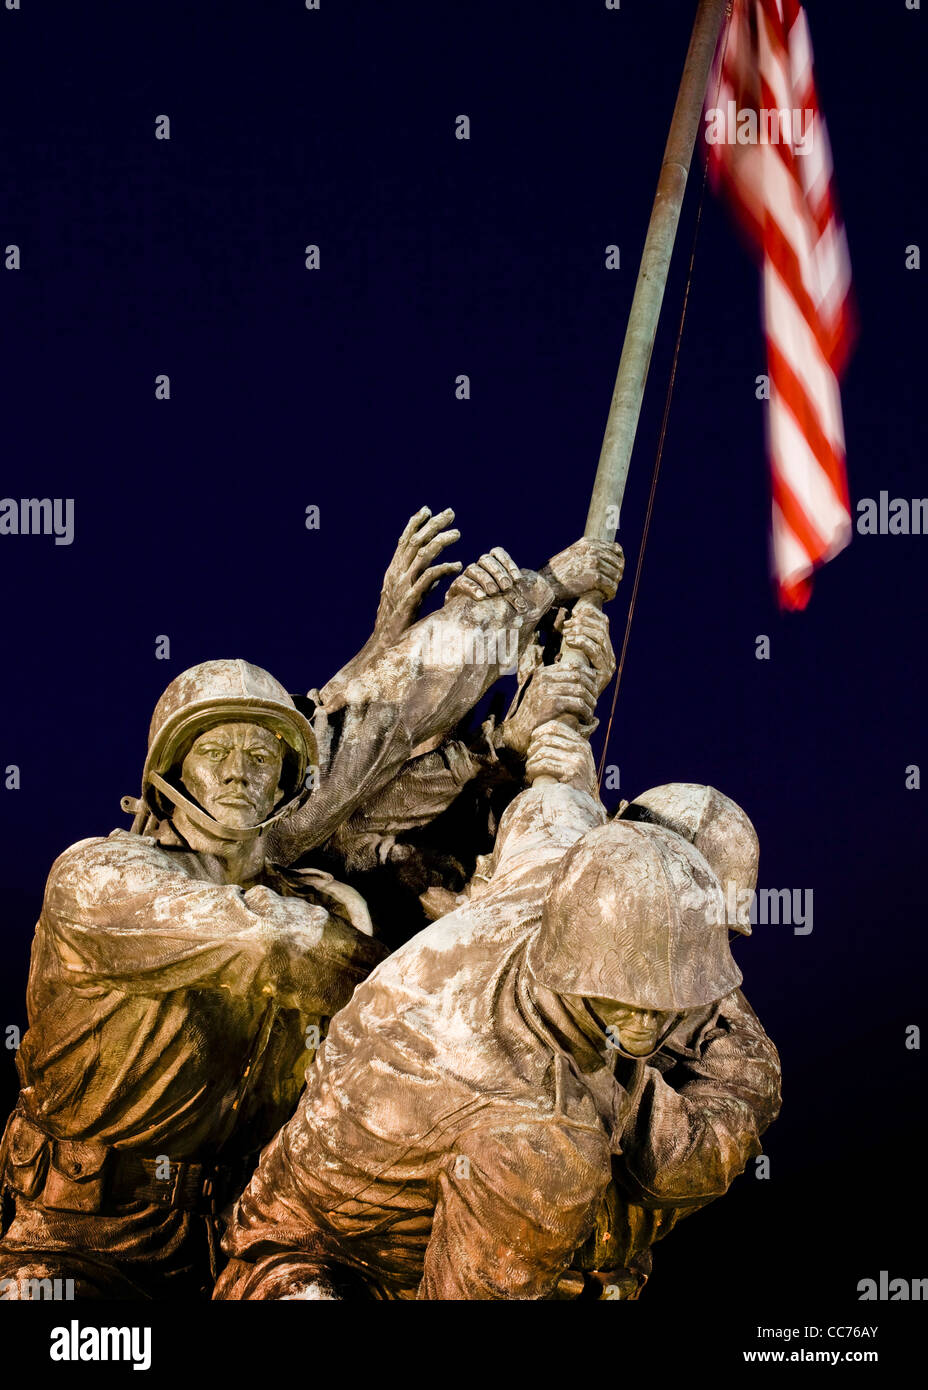 Iwo Jima Marine Corps War Memorial sculpture at night Stock Photo